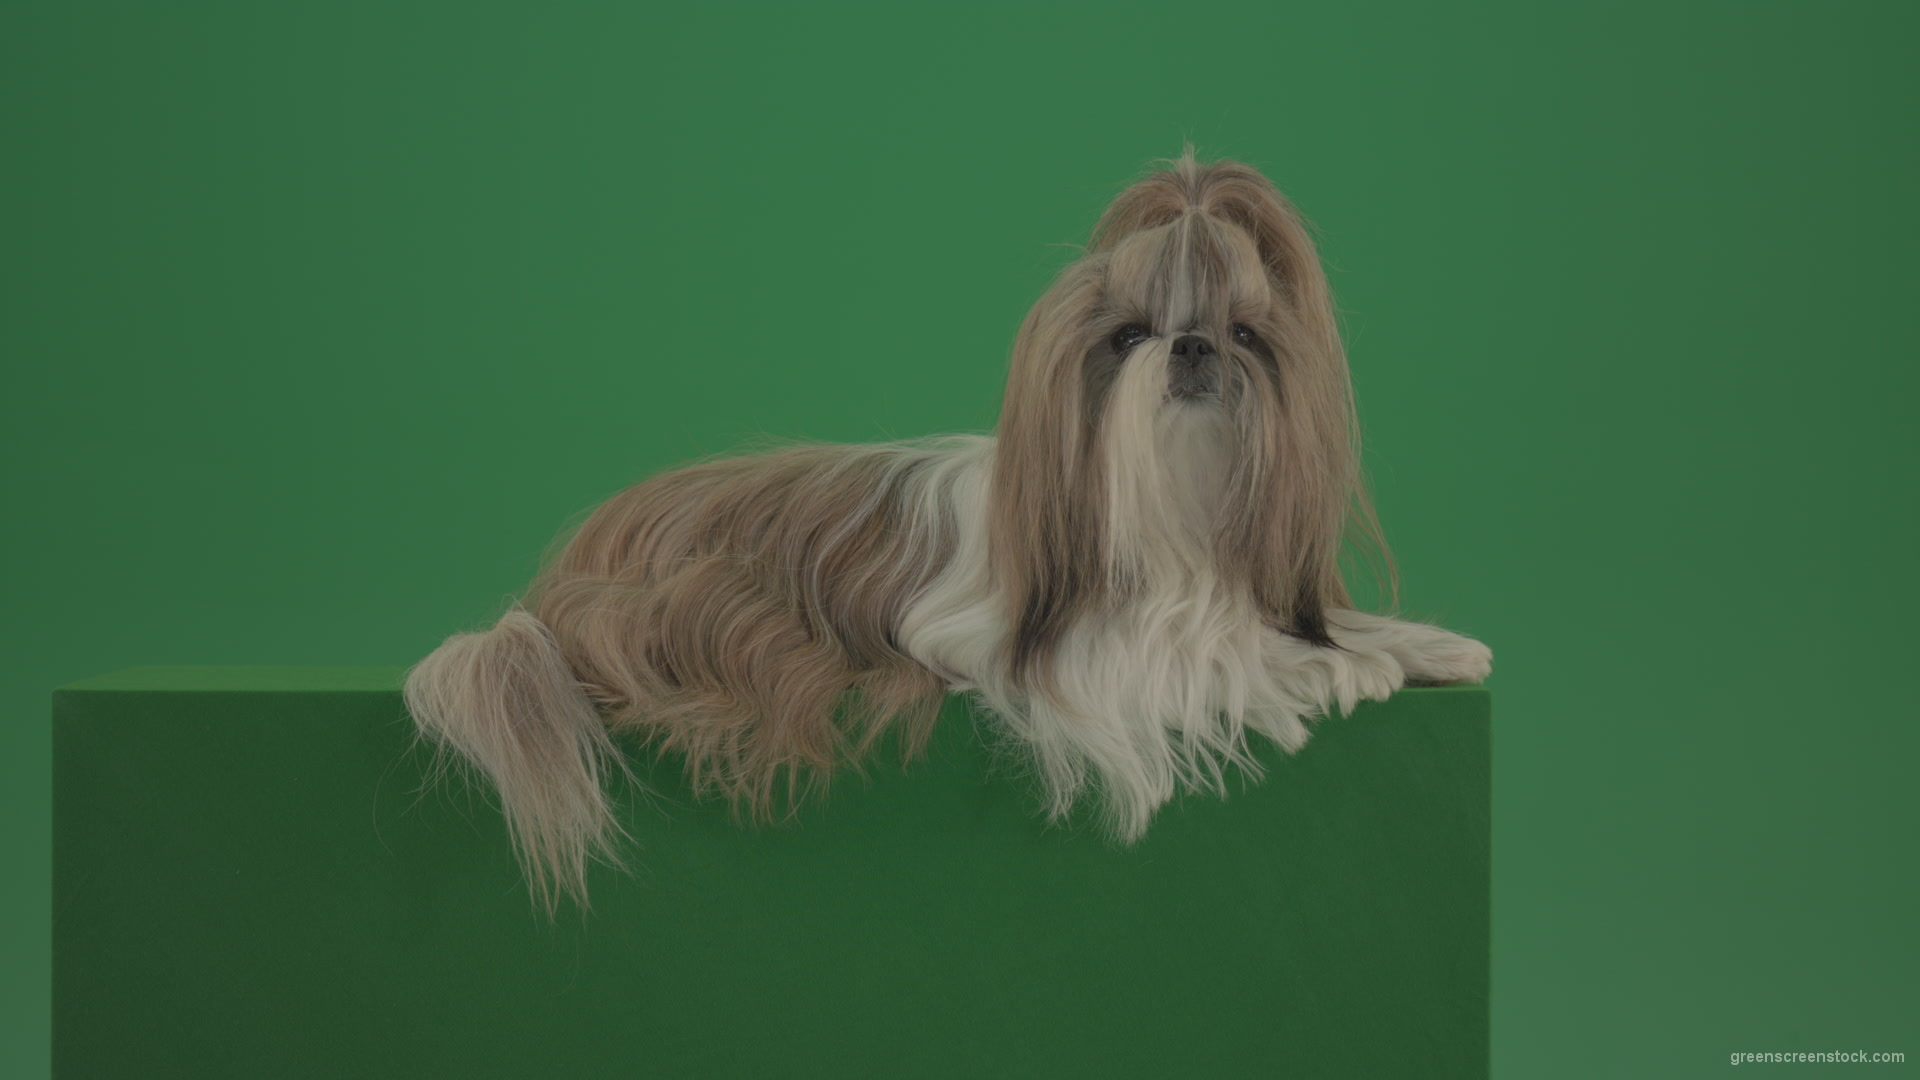 Luxury-bright-hair-Shihtzu-dog-pet-relaxing-on-green-screen-4K_009 Green Screen Stock